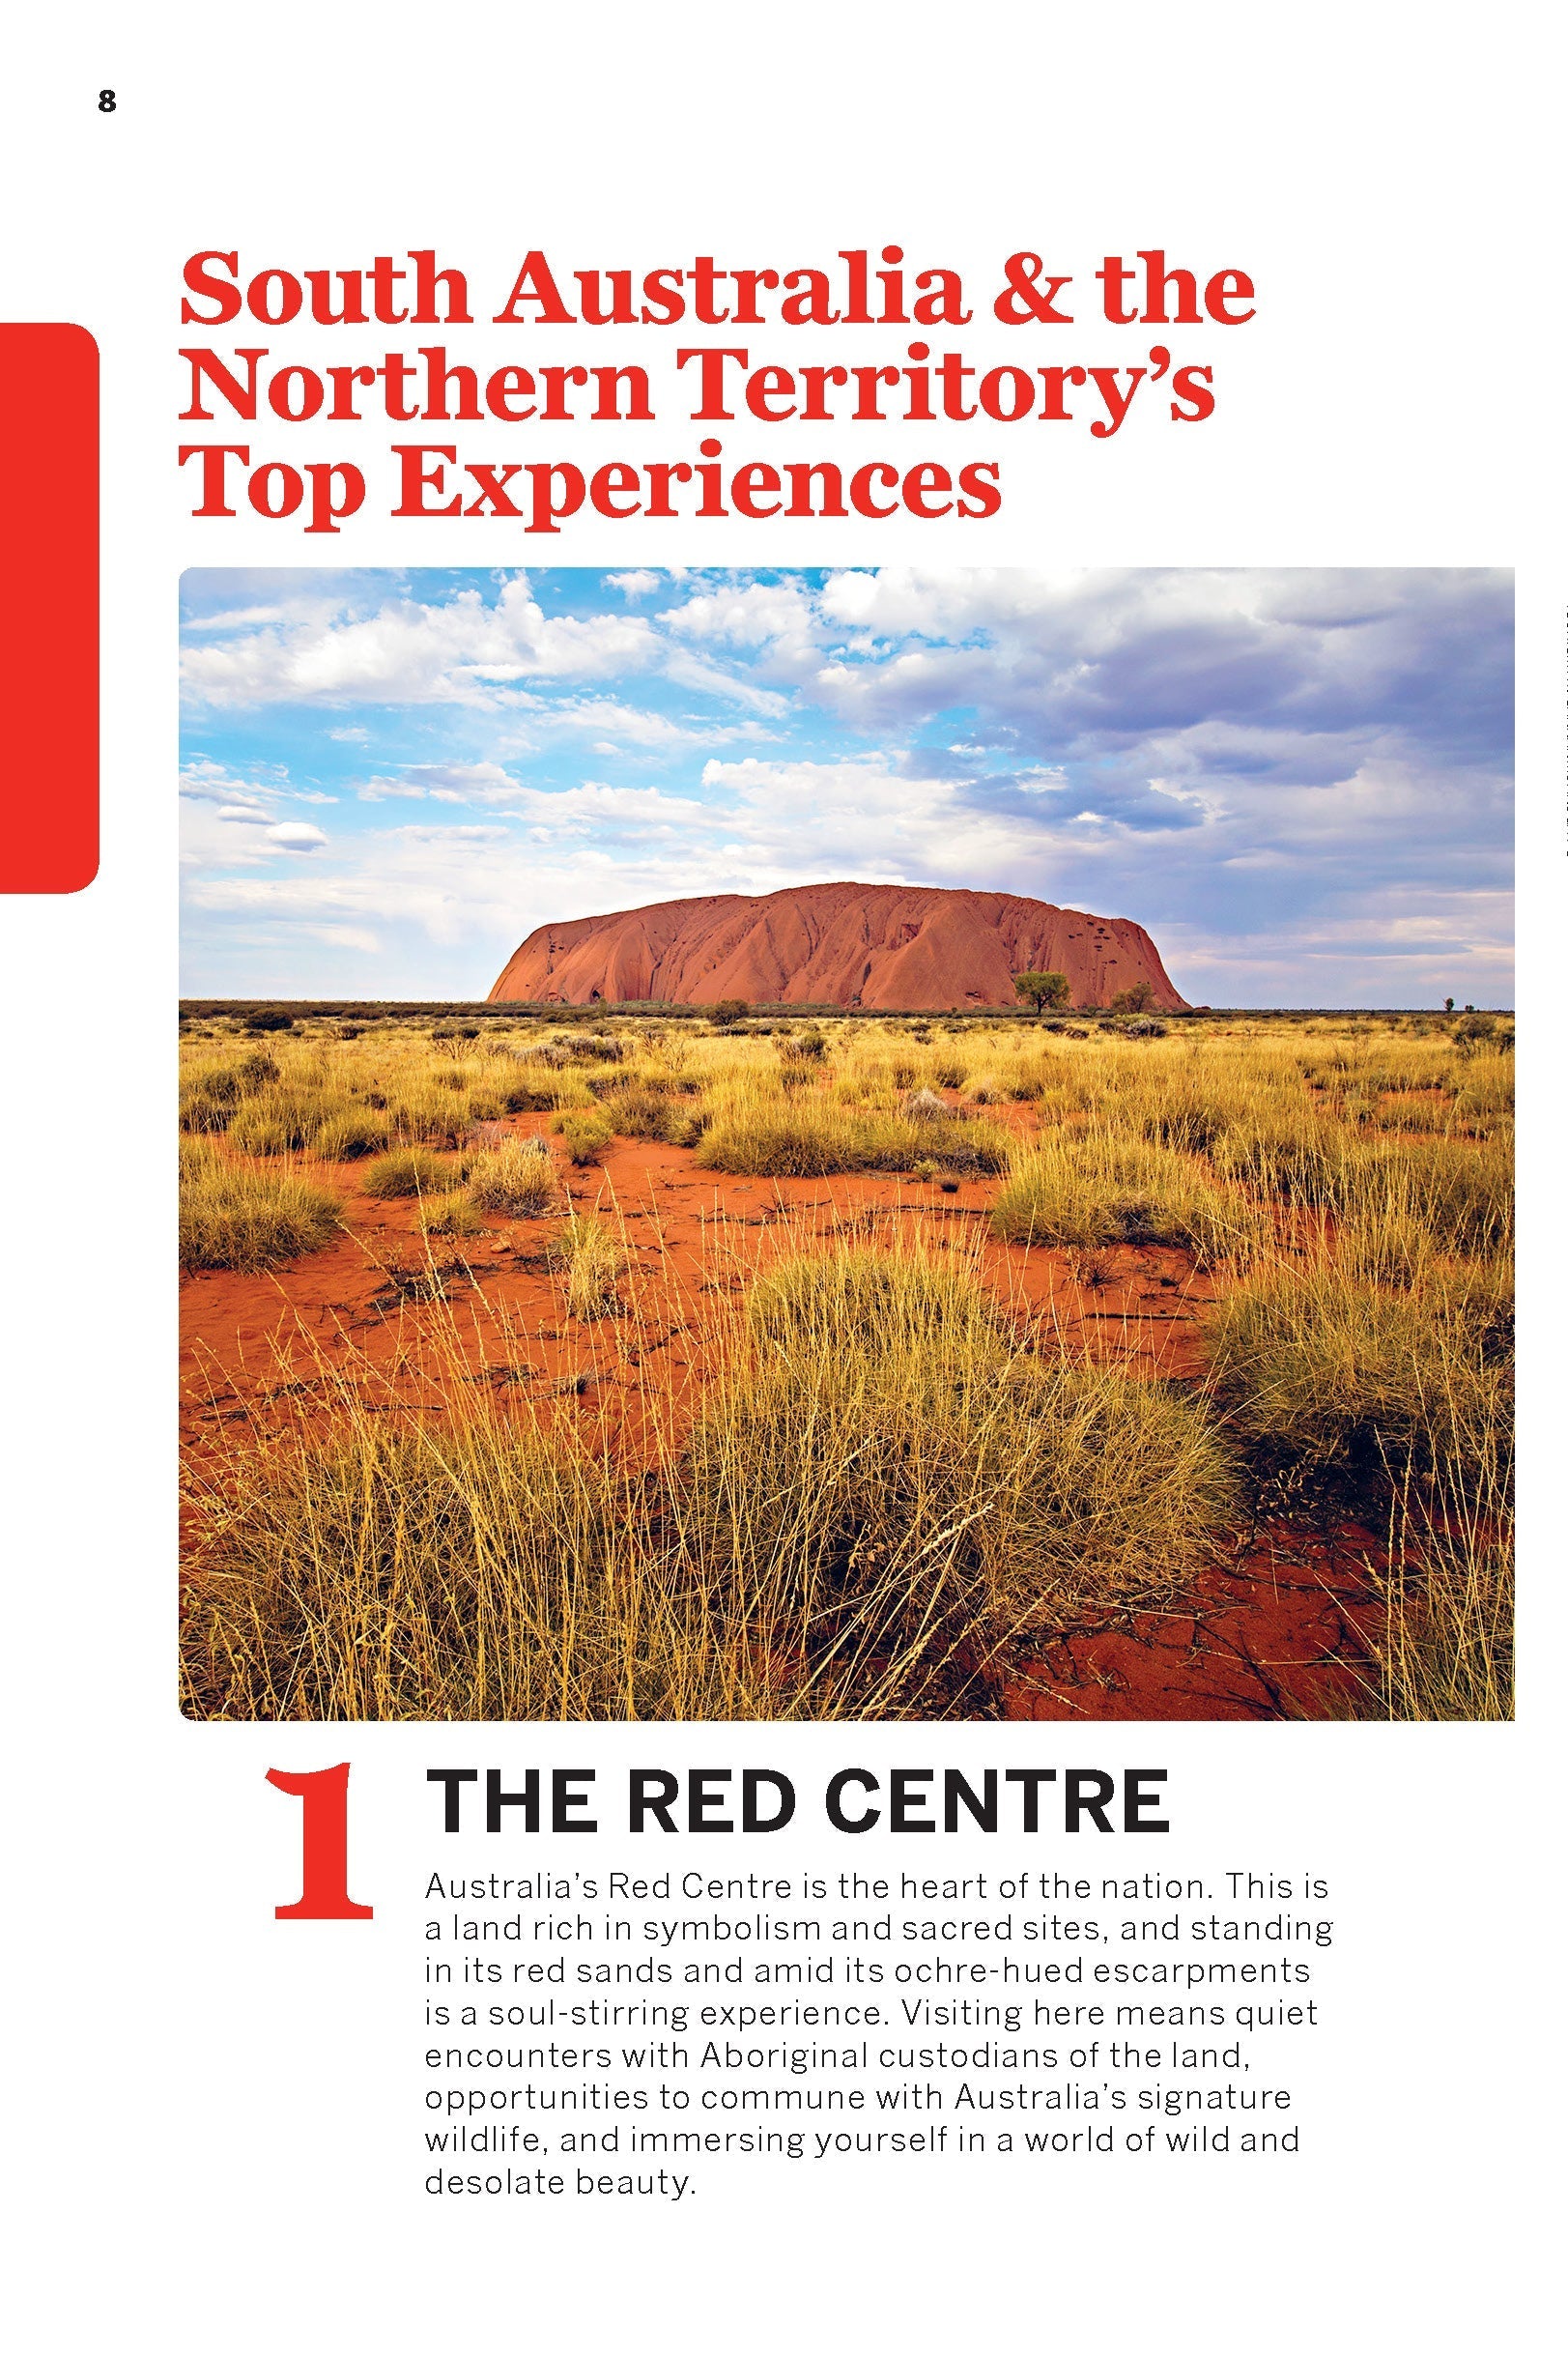 South Australia & Northern Territory - Book